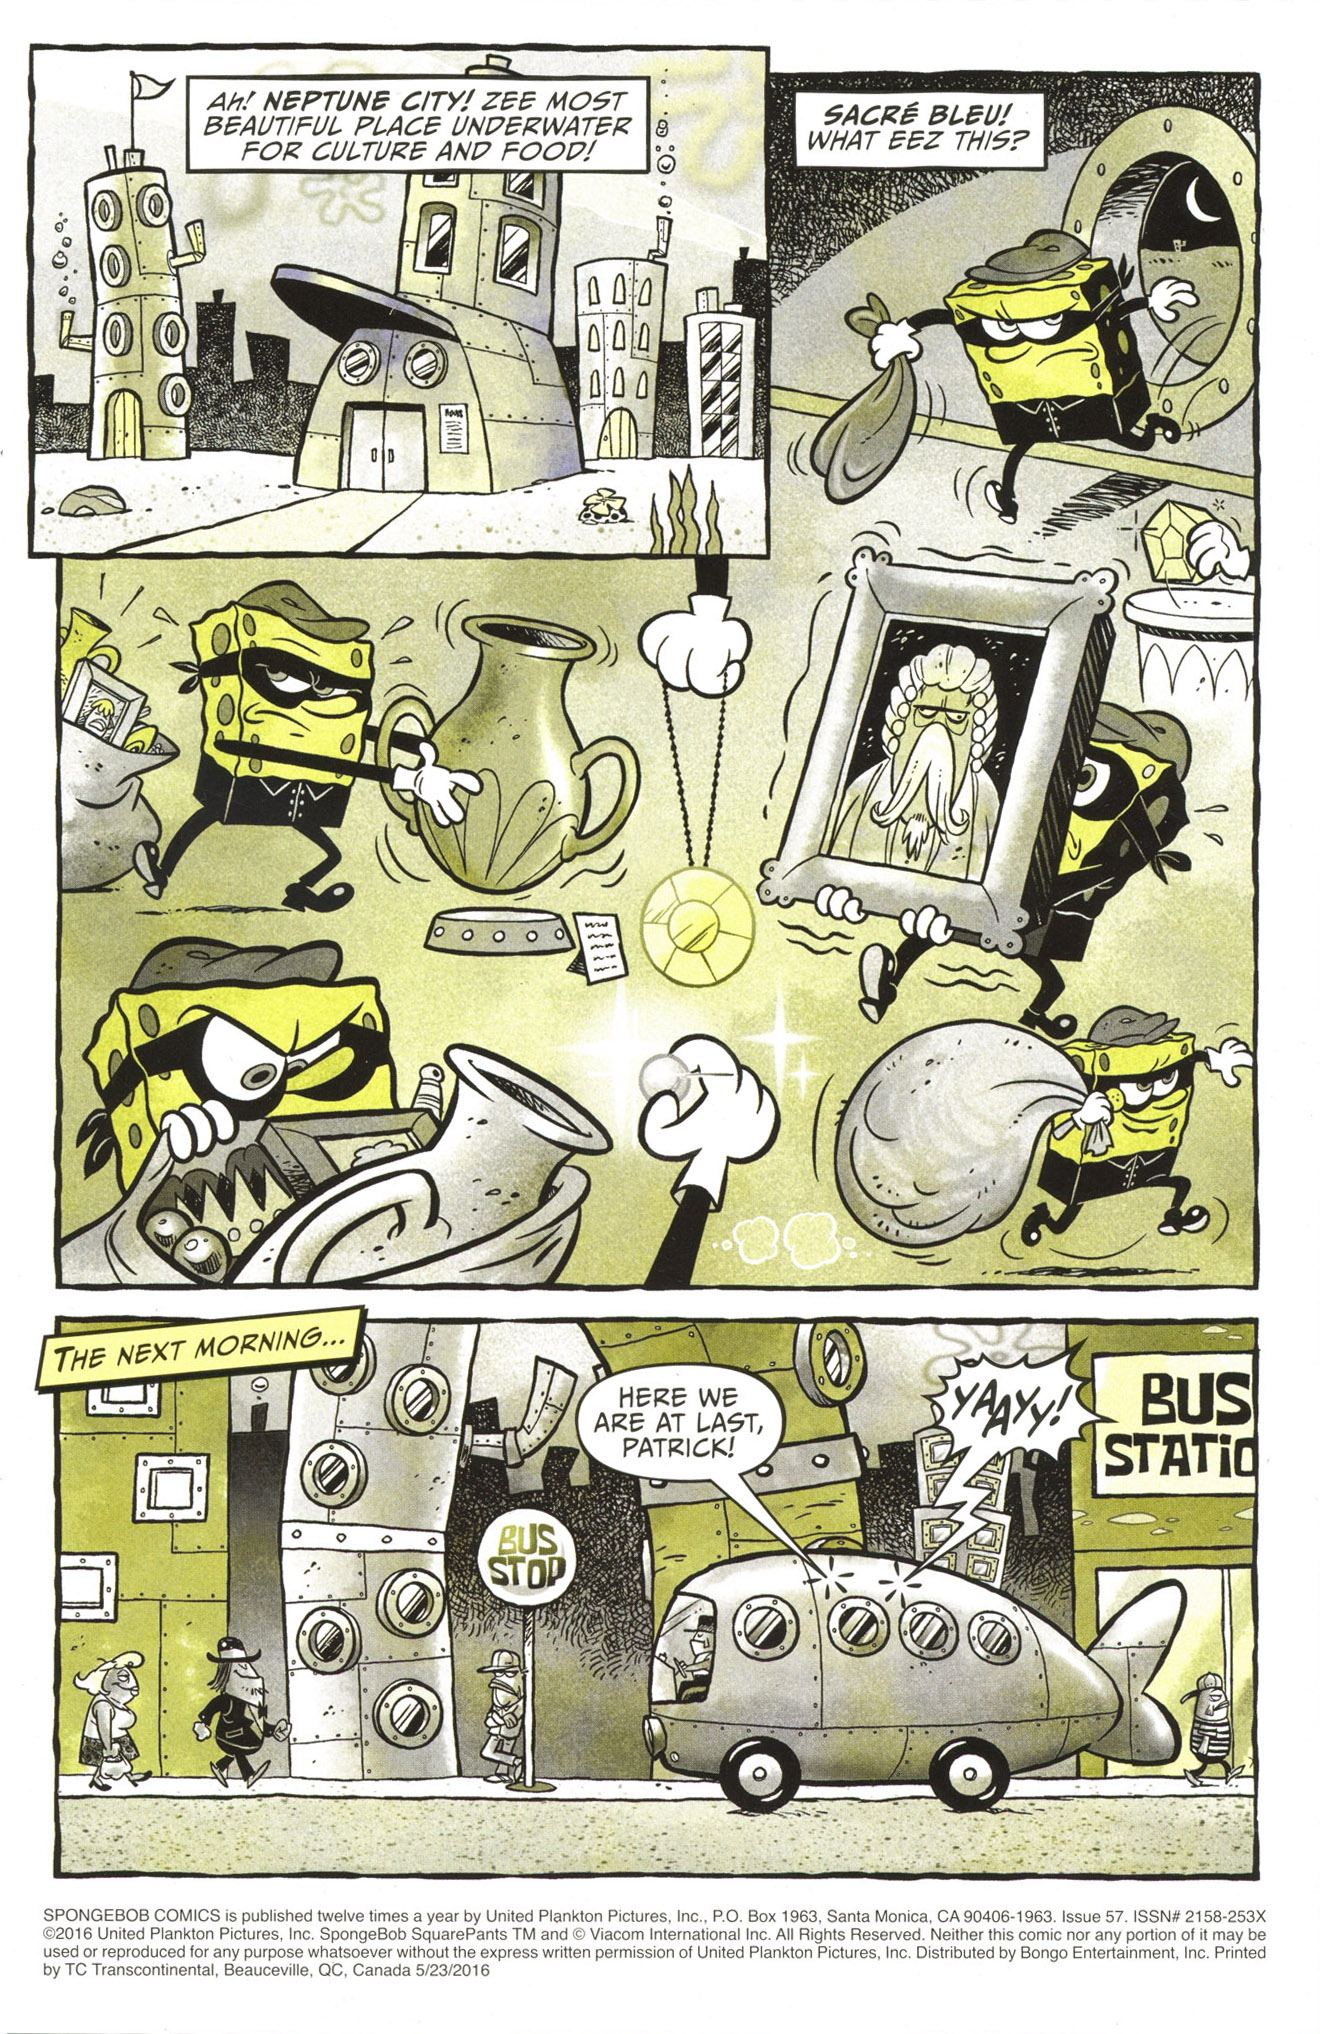 SpongeBob Comics (2011-): Chapter 57 - Page 3